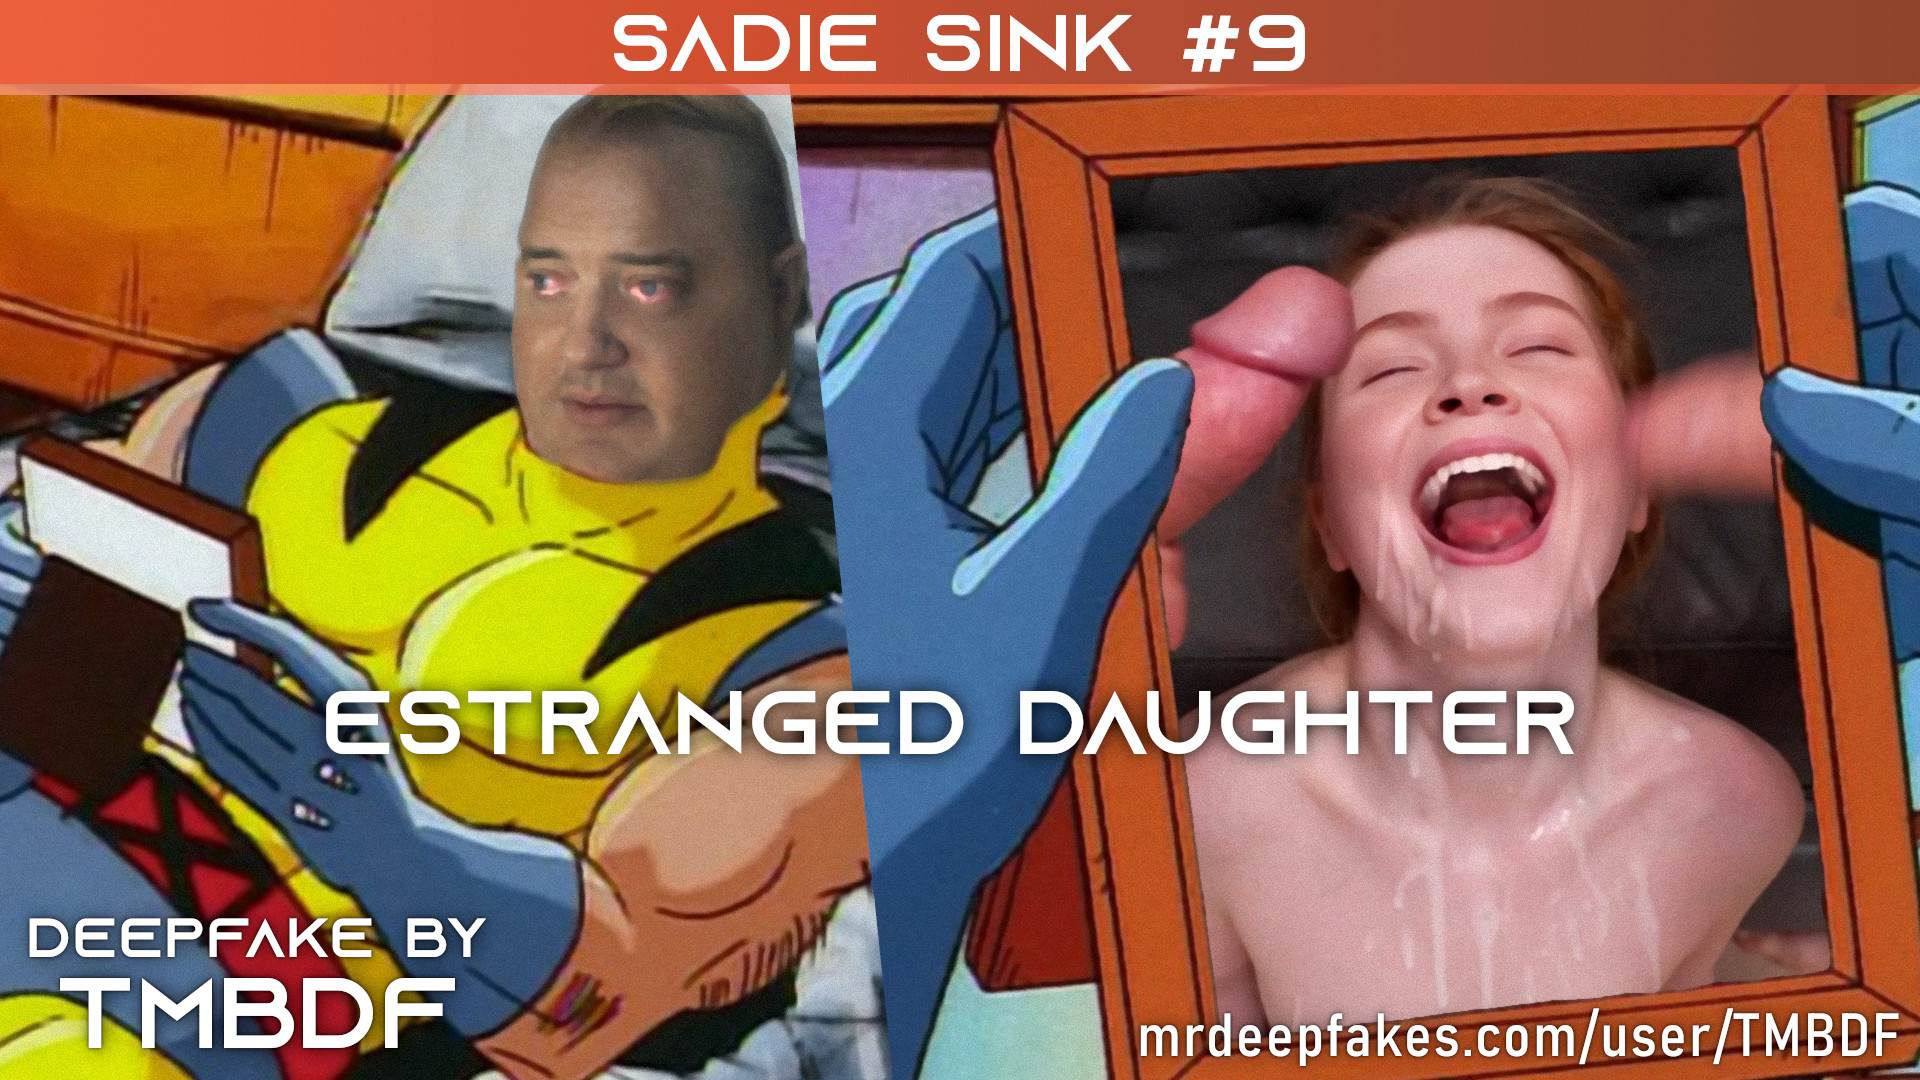 Sadie Sink #9 - PREVIEW - Full version (25:10) in video description